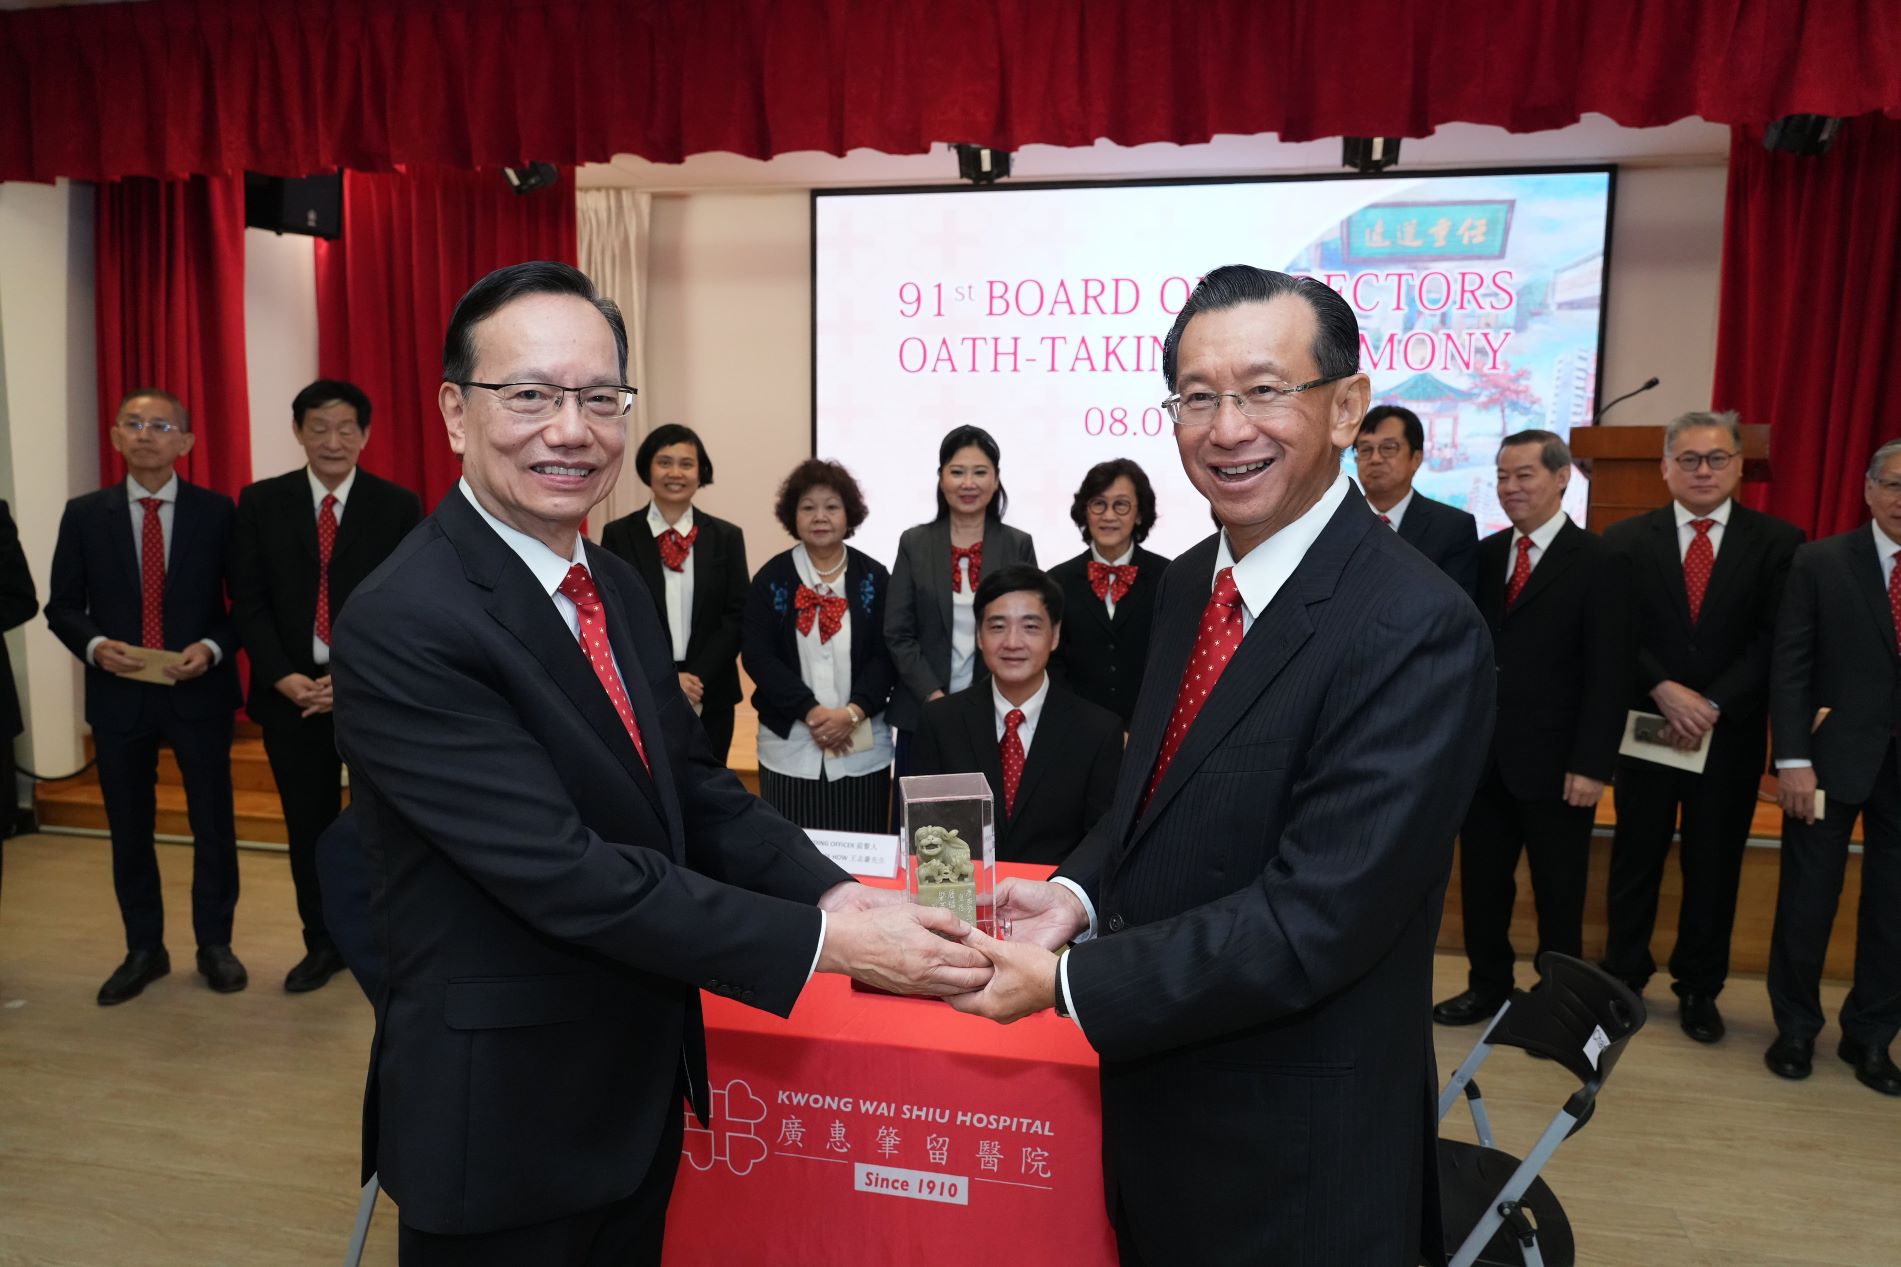 Mr Tang Kin Fei Appointed Chairman as 91st Board of Directors Sworn In